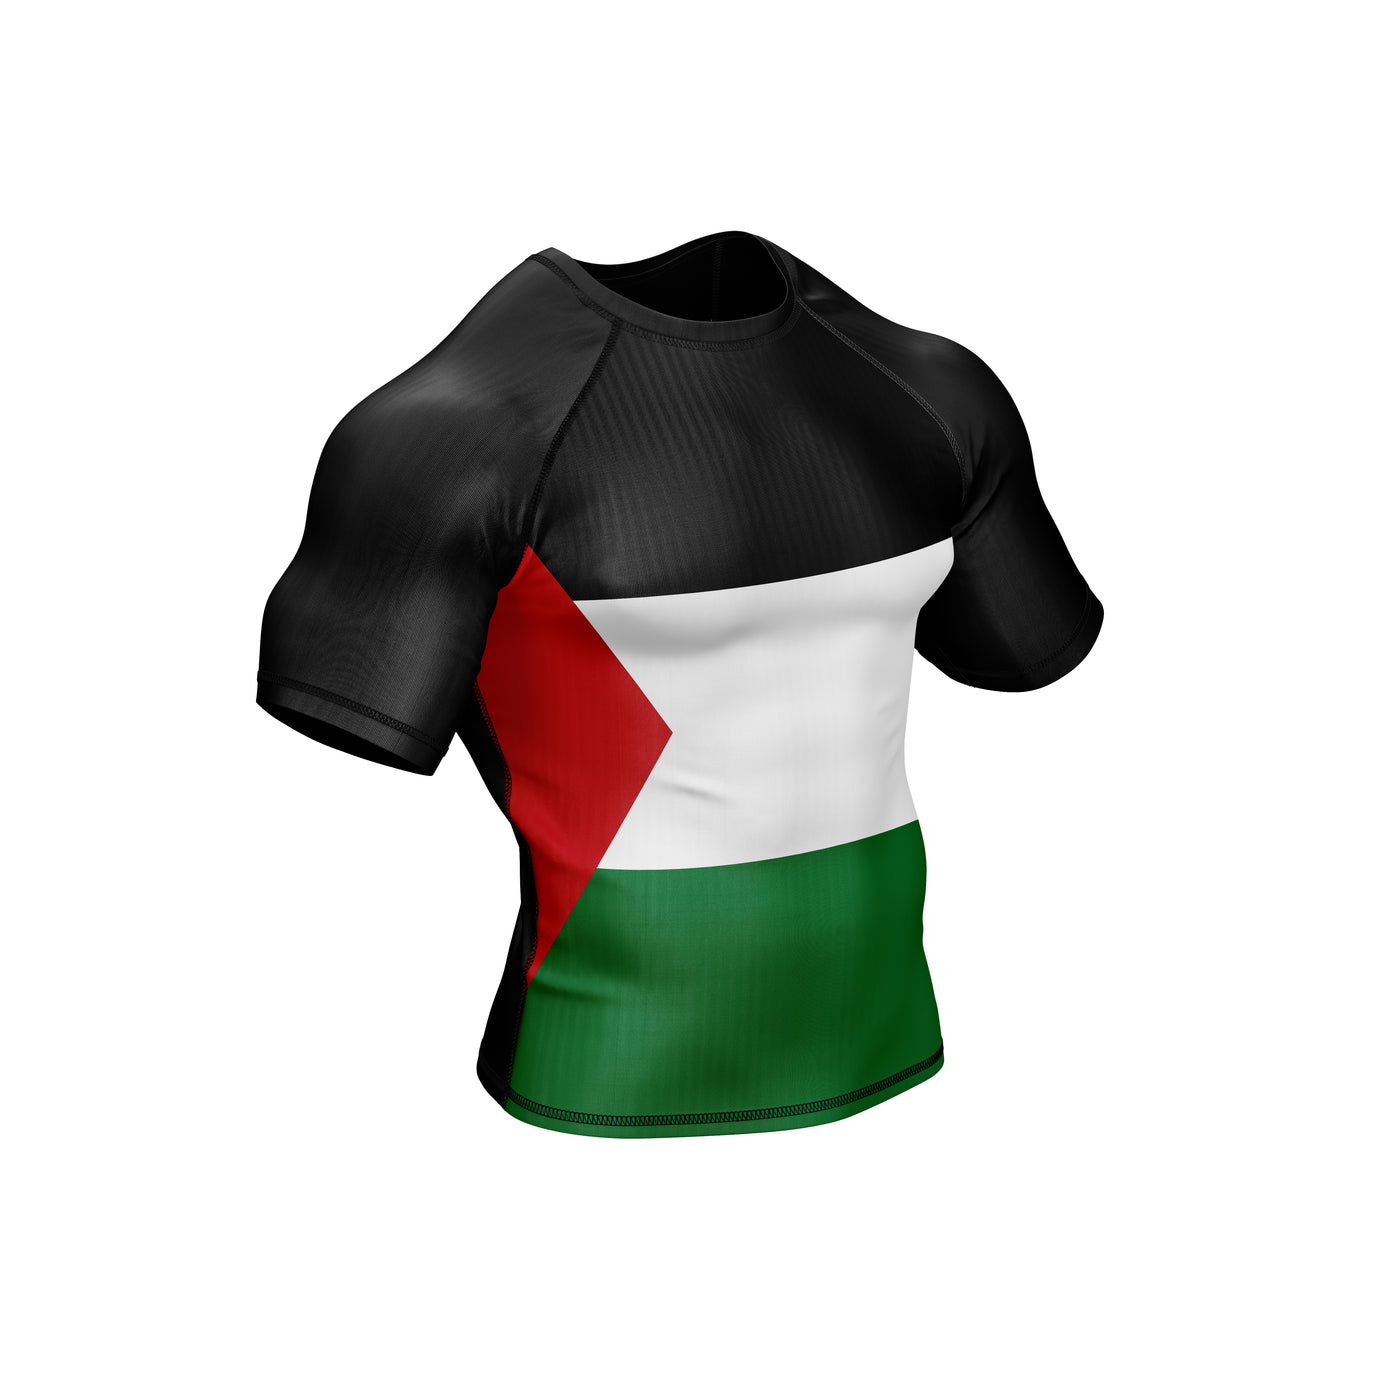 Palestine Patriotic Rashguard